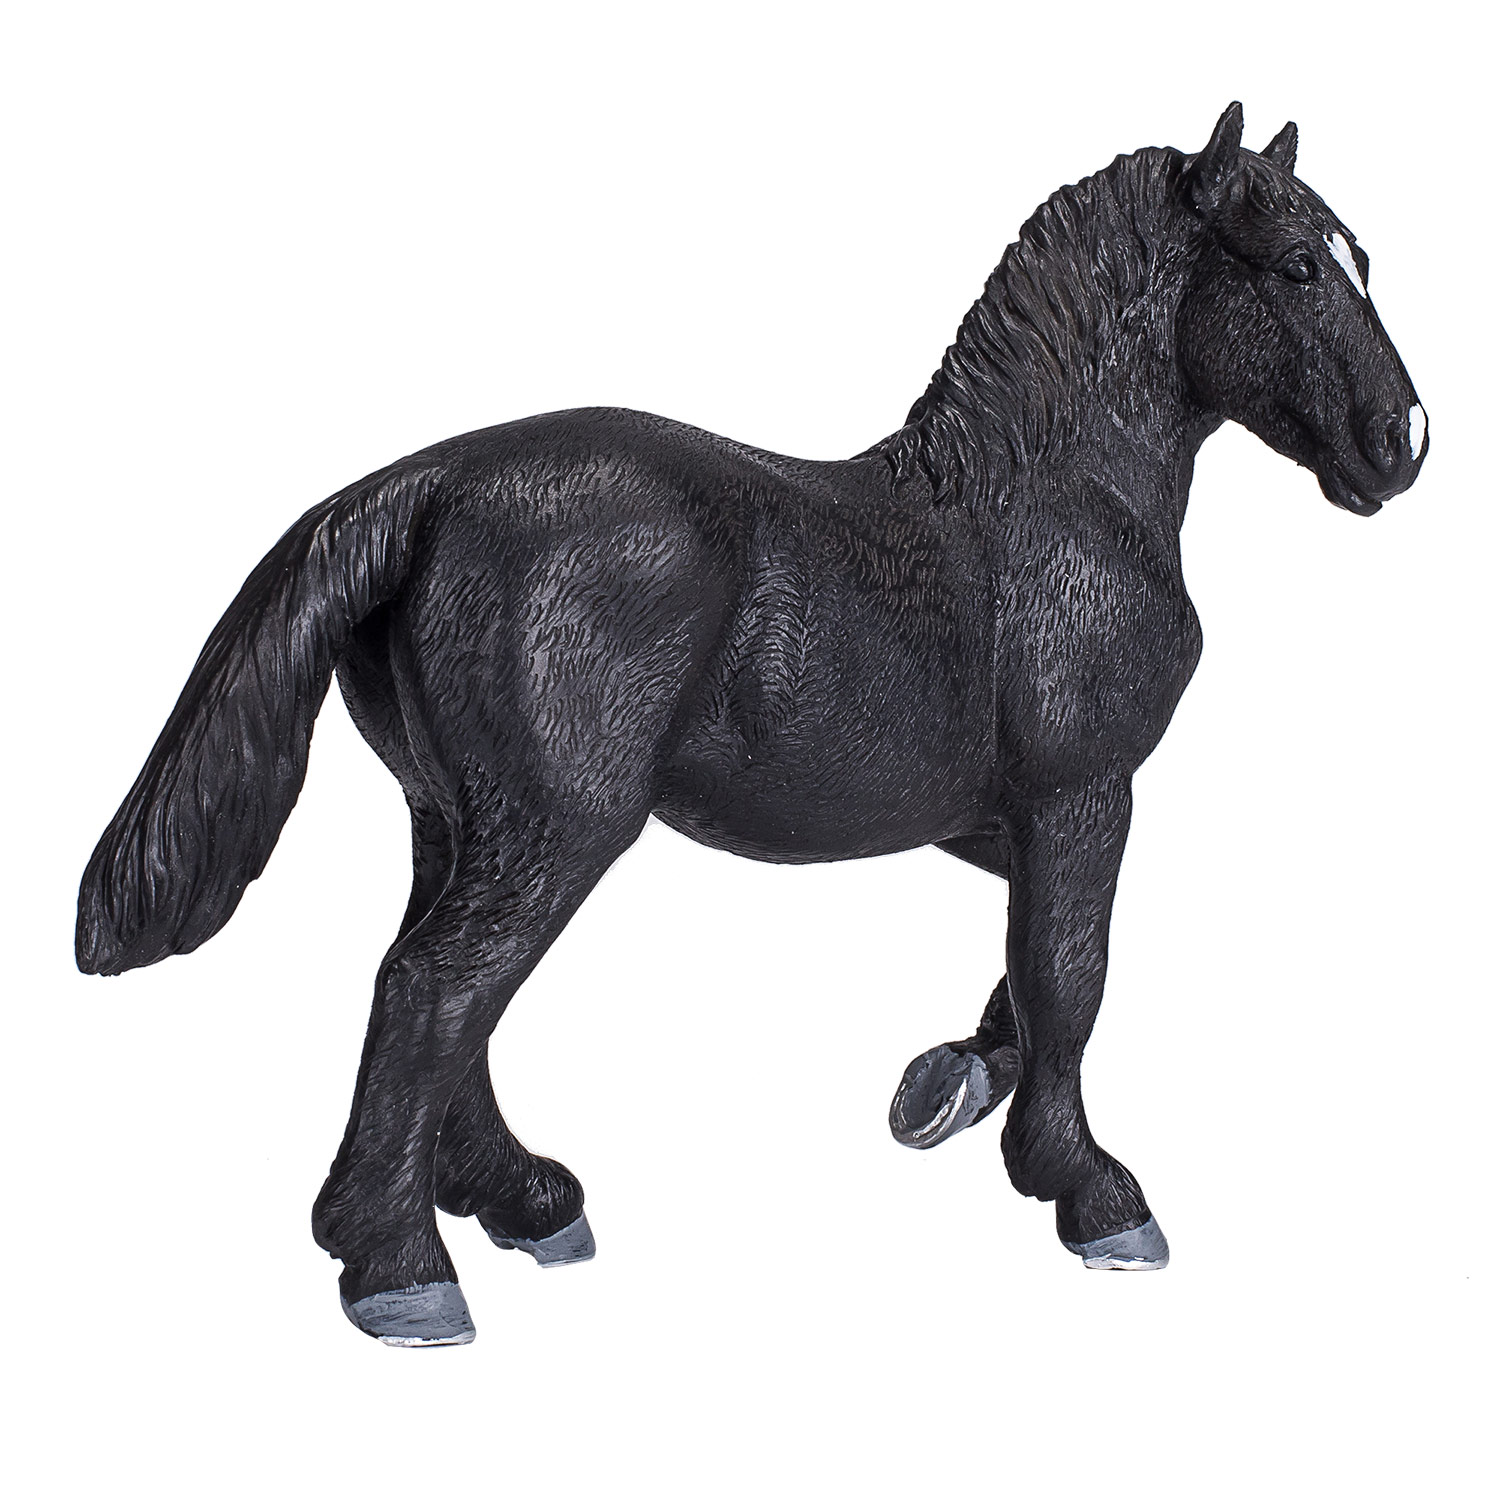 Mojo Horse World Percheron - 387396